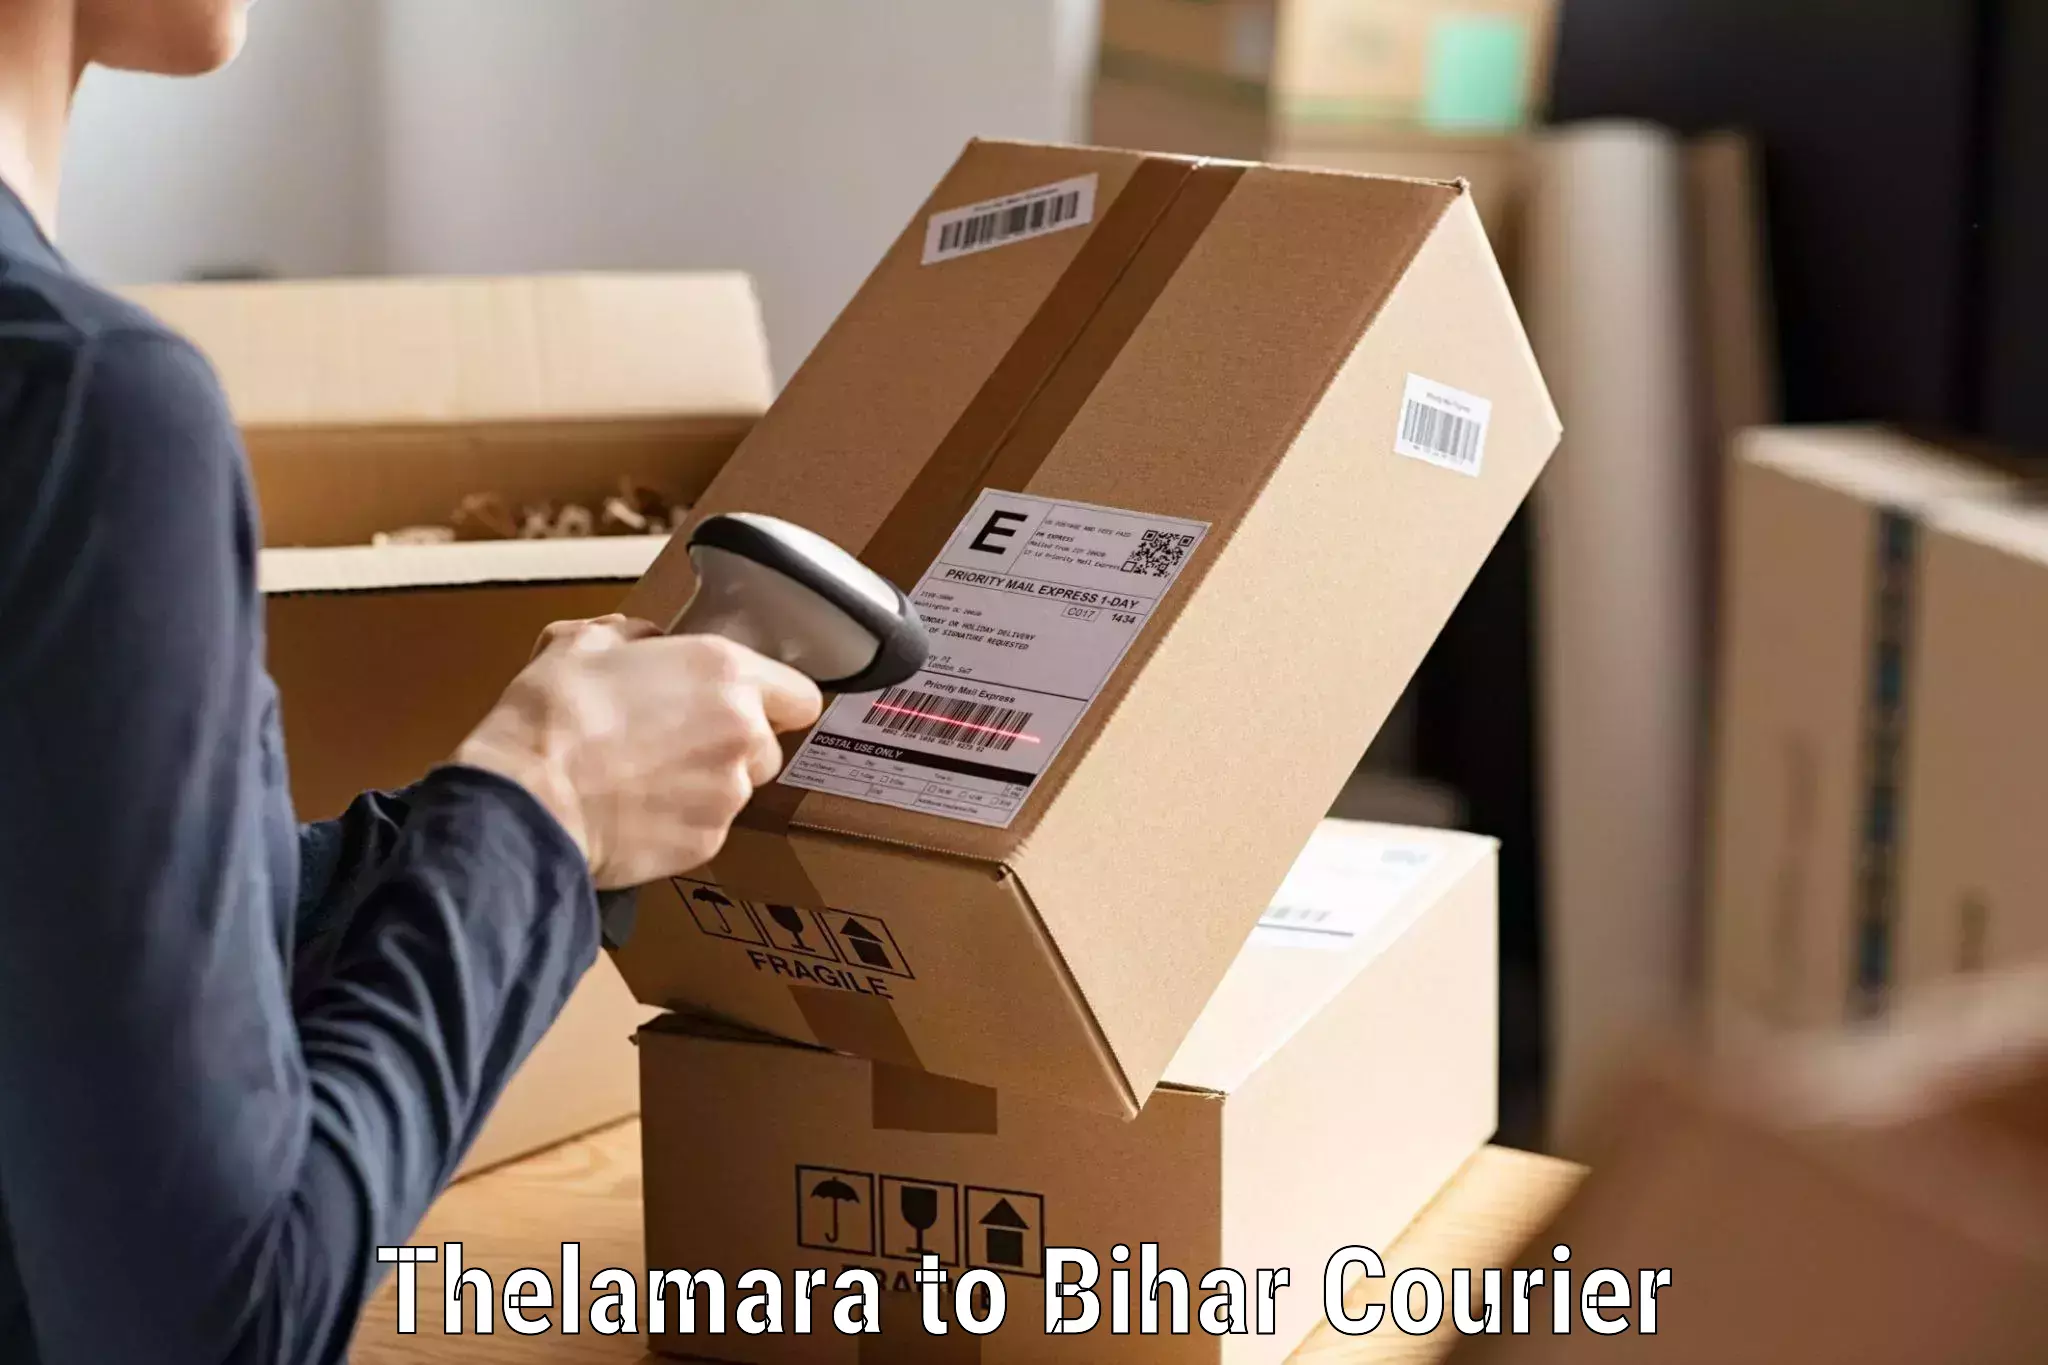 Professional courier handling Thelamara to Gopalganj